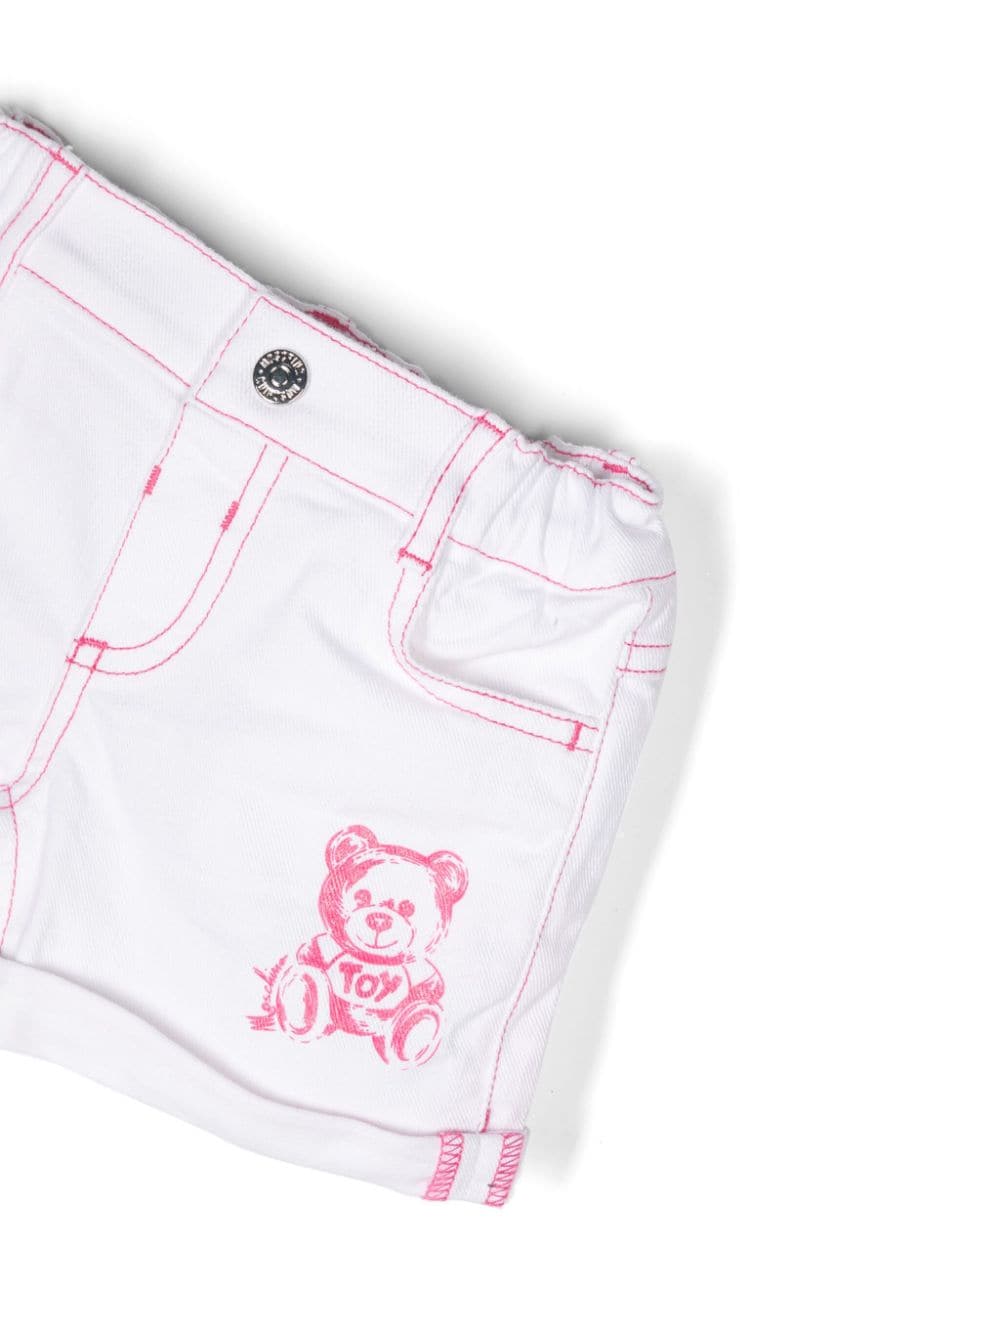 Completo shorts in cotone con stampa Teddy Bear